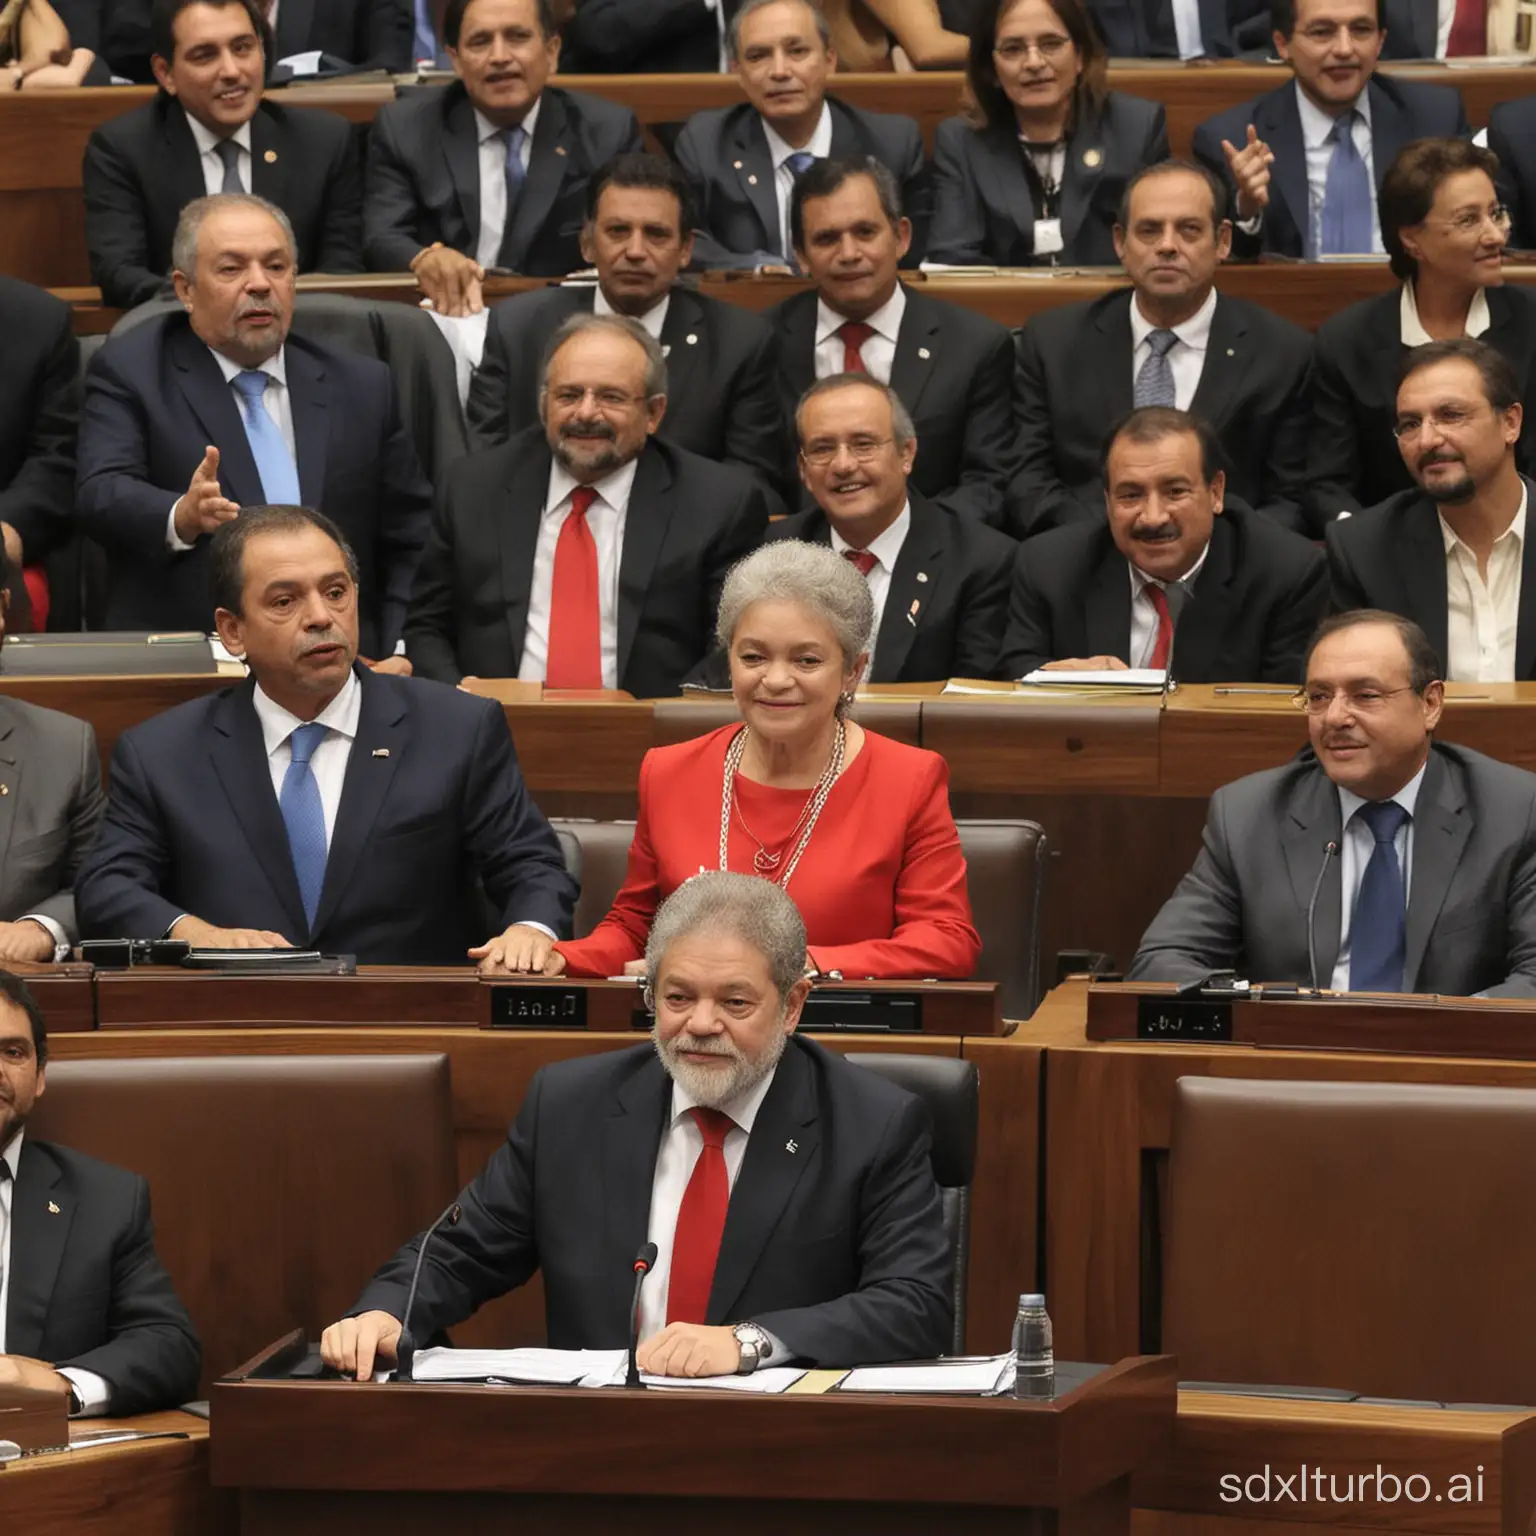 Lula da Silva in Brazilian Parliament